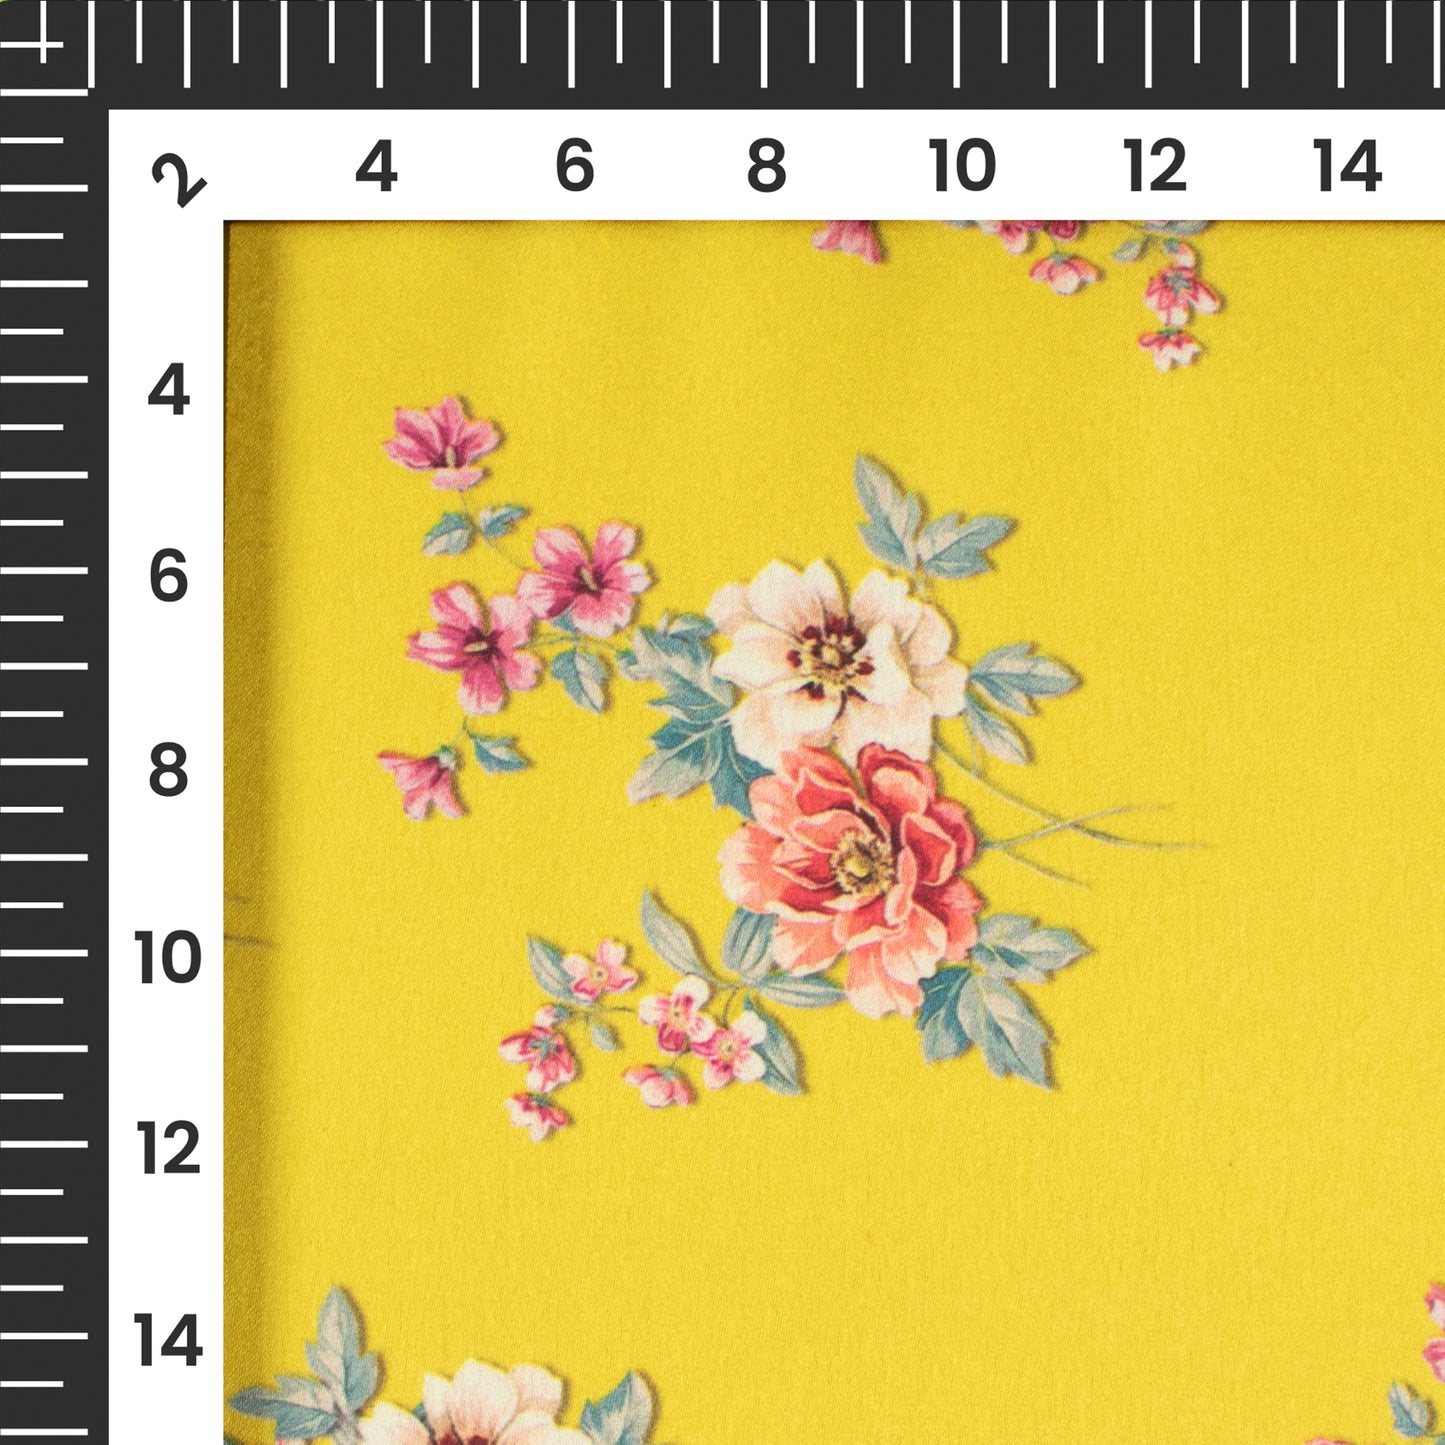 Yellow Floral Digital Print Japan Satin Fabric